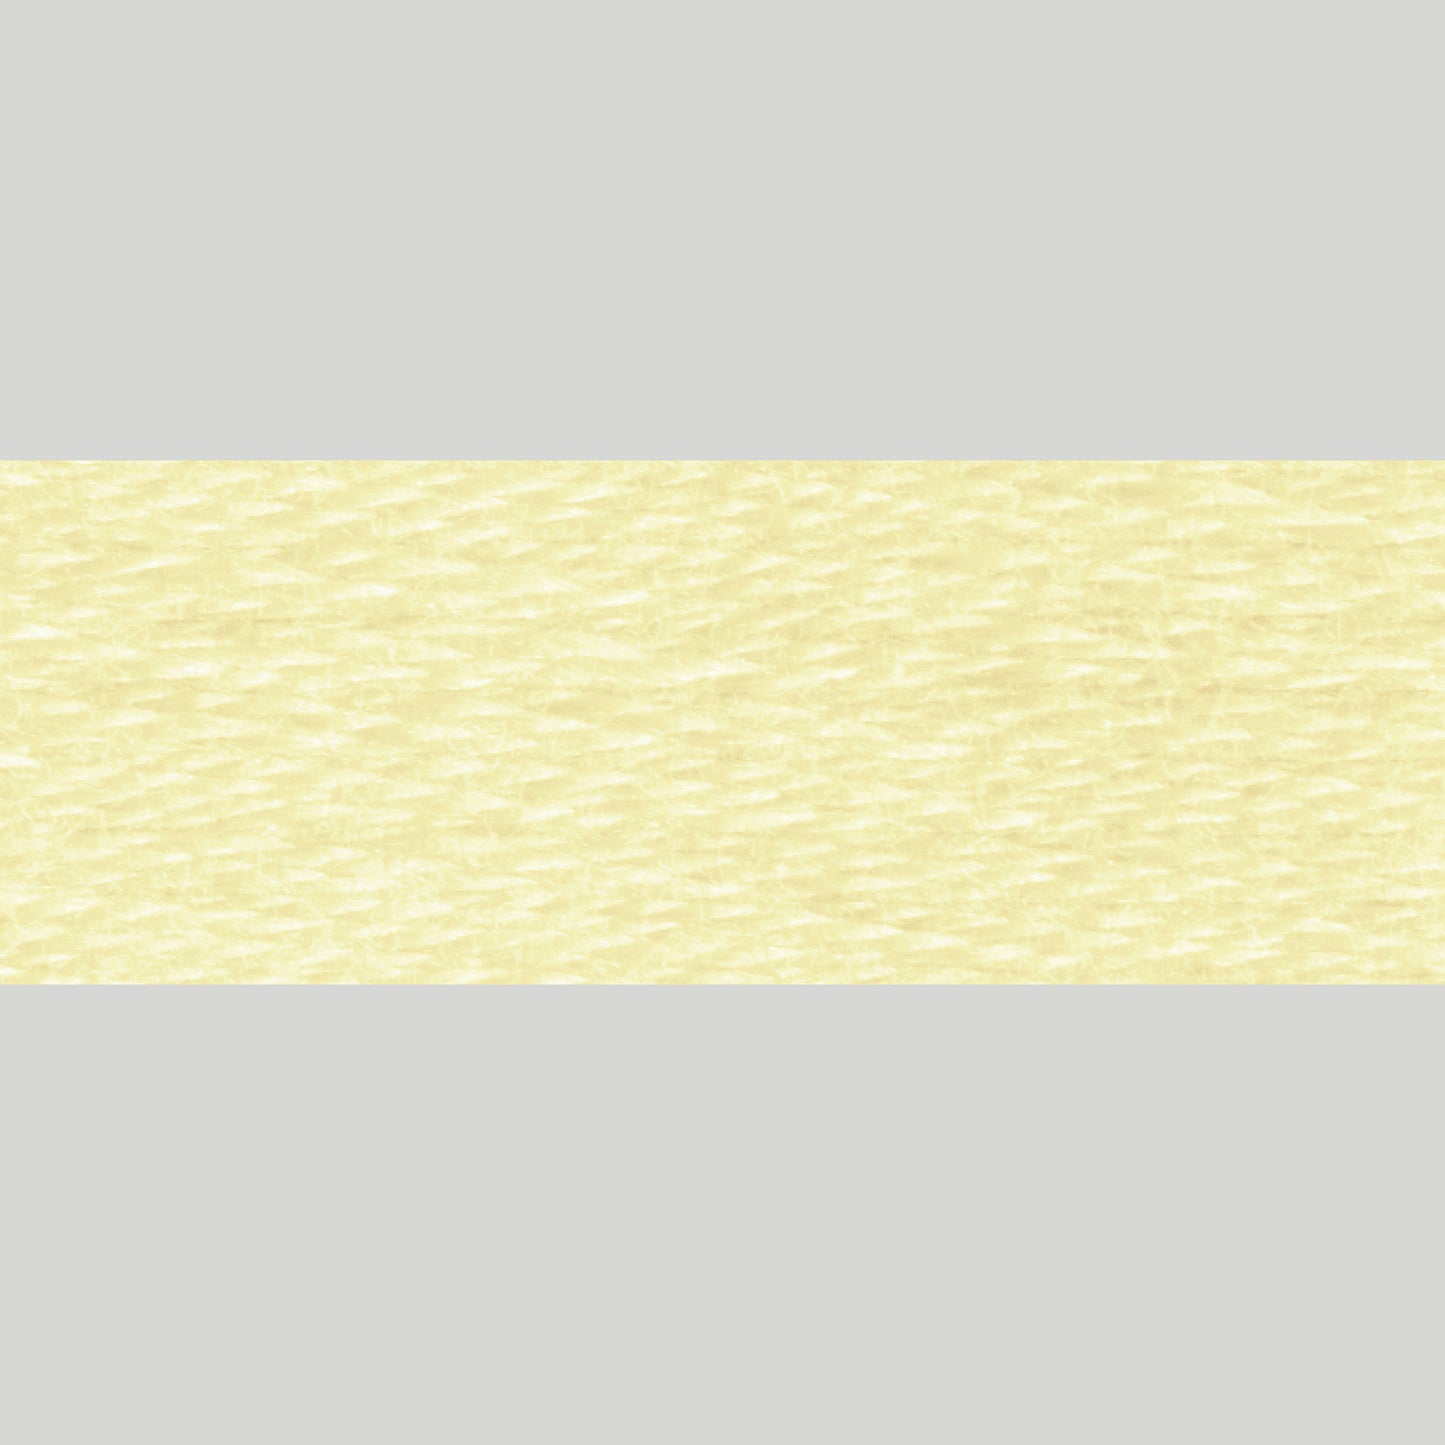 DMC Embroidery Floss - 3047 Light Yellow Beige Alternative View #1